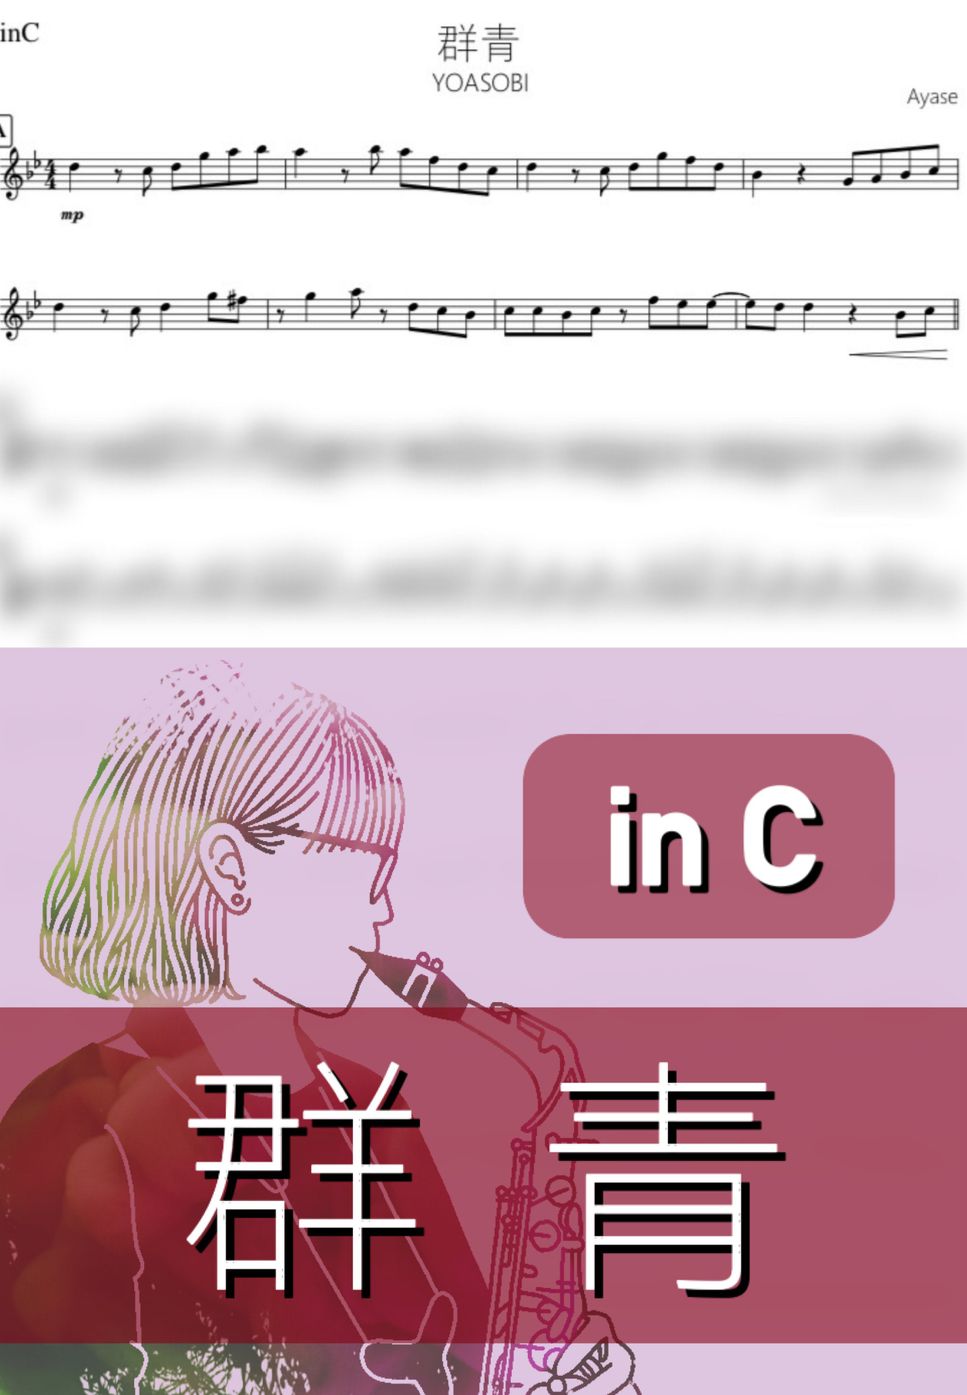 YOASOBI - 群青 (C) by kanamusic